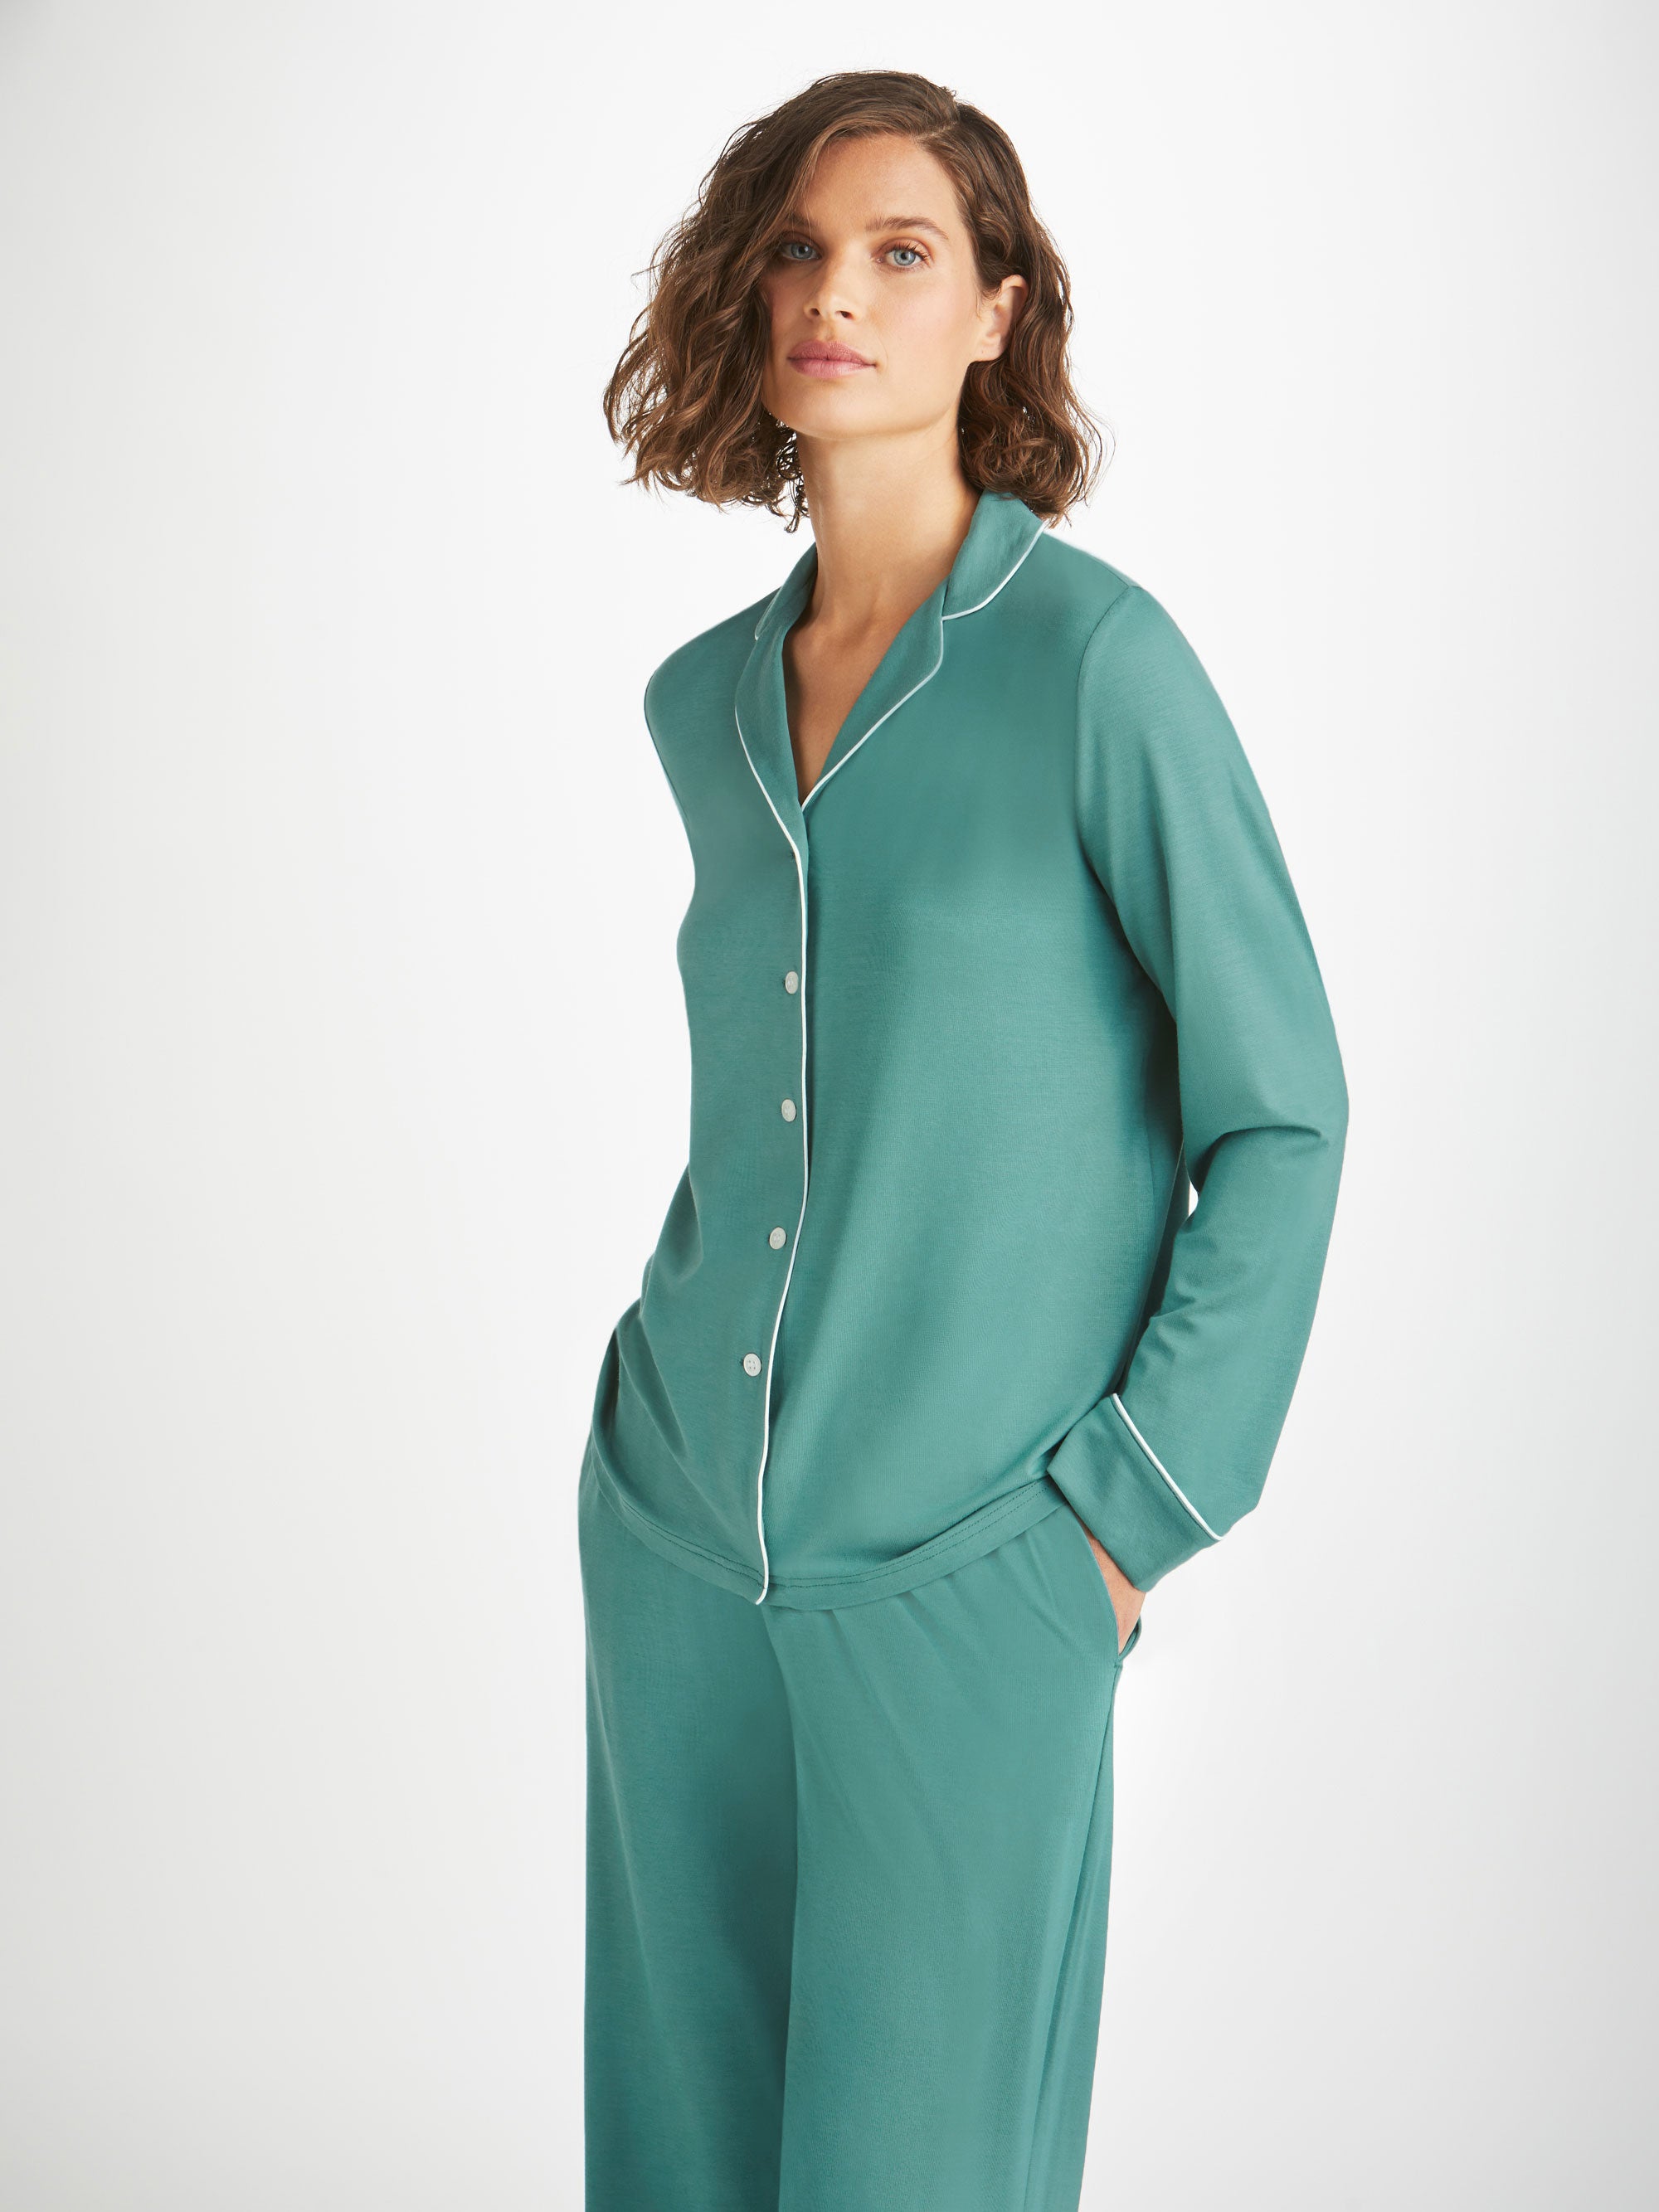 Women's Pyjamas Lara Micro Modal Stretch Teal